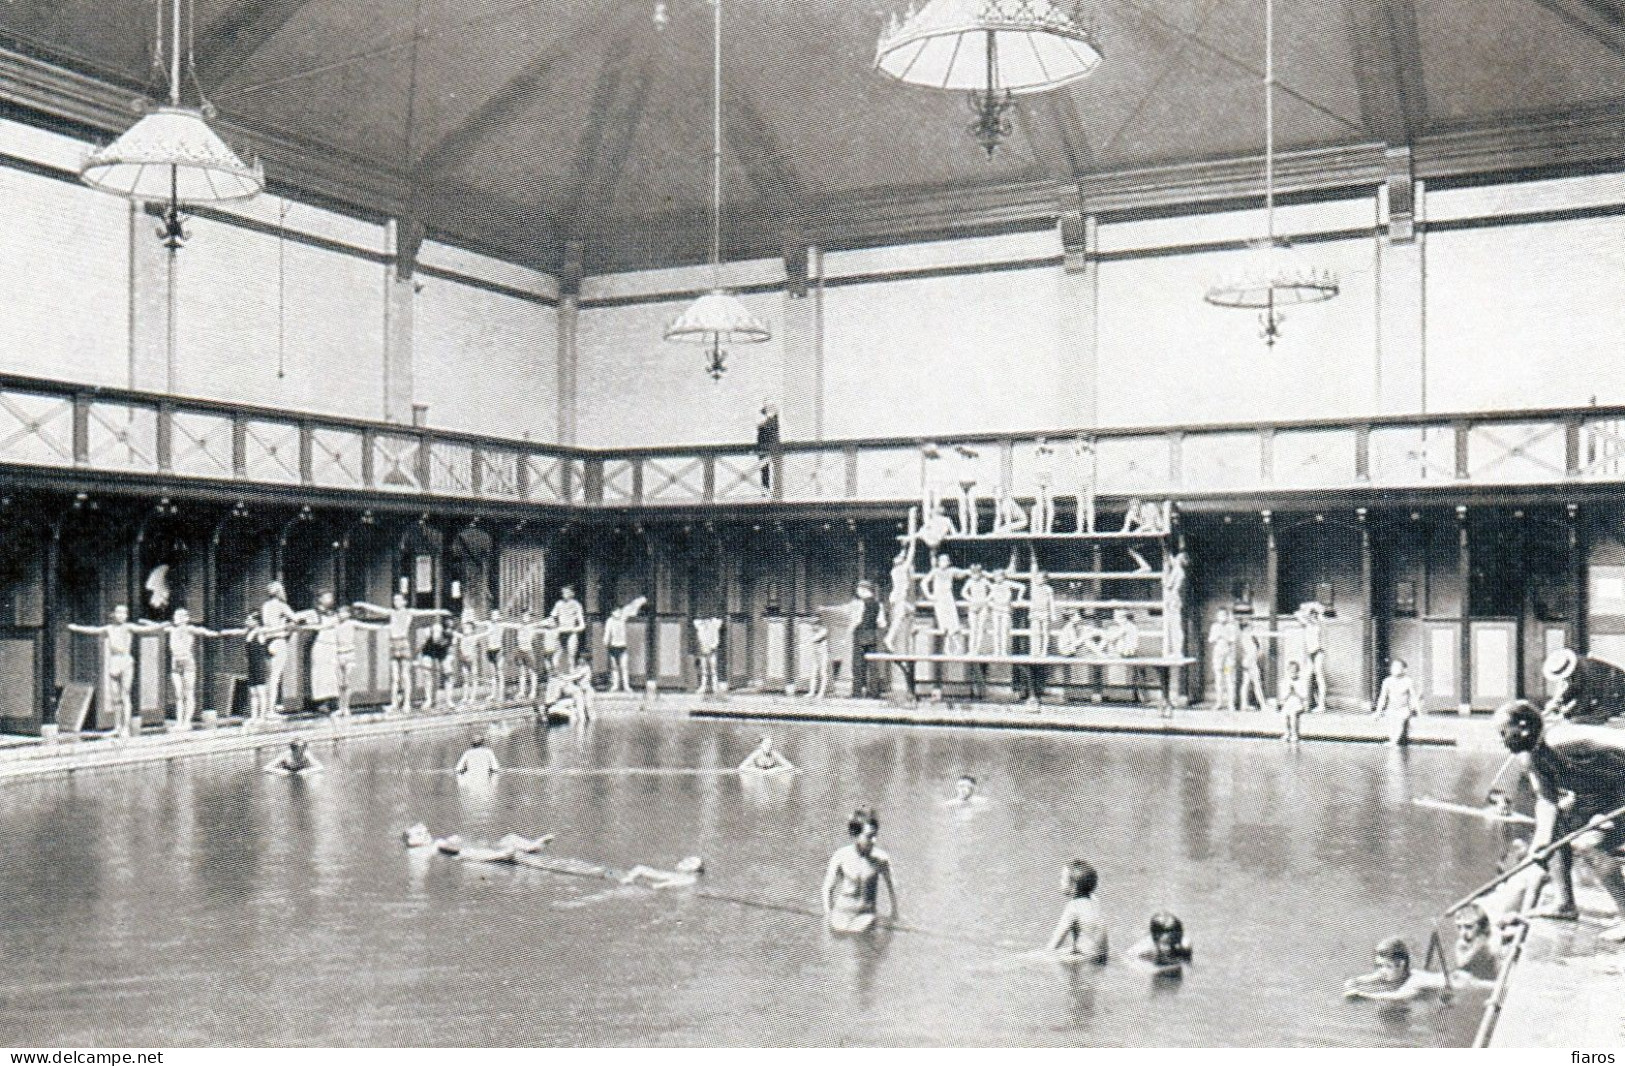 "Learning To Swim,c.1900" School Children, Bathers, Kensington Public Baths, Lancaster Road, London [CPM Nostalgia Card] - Groepen Kinderen En Familie